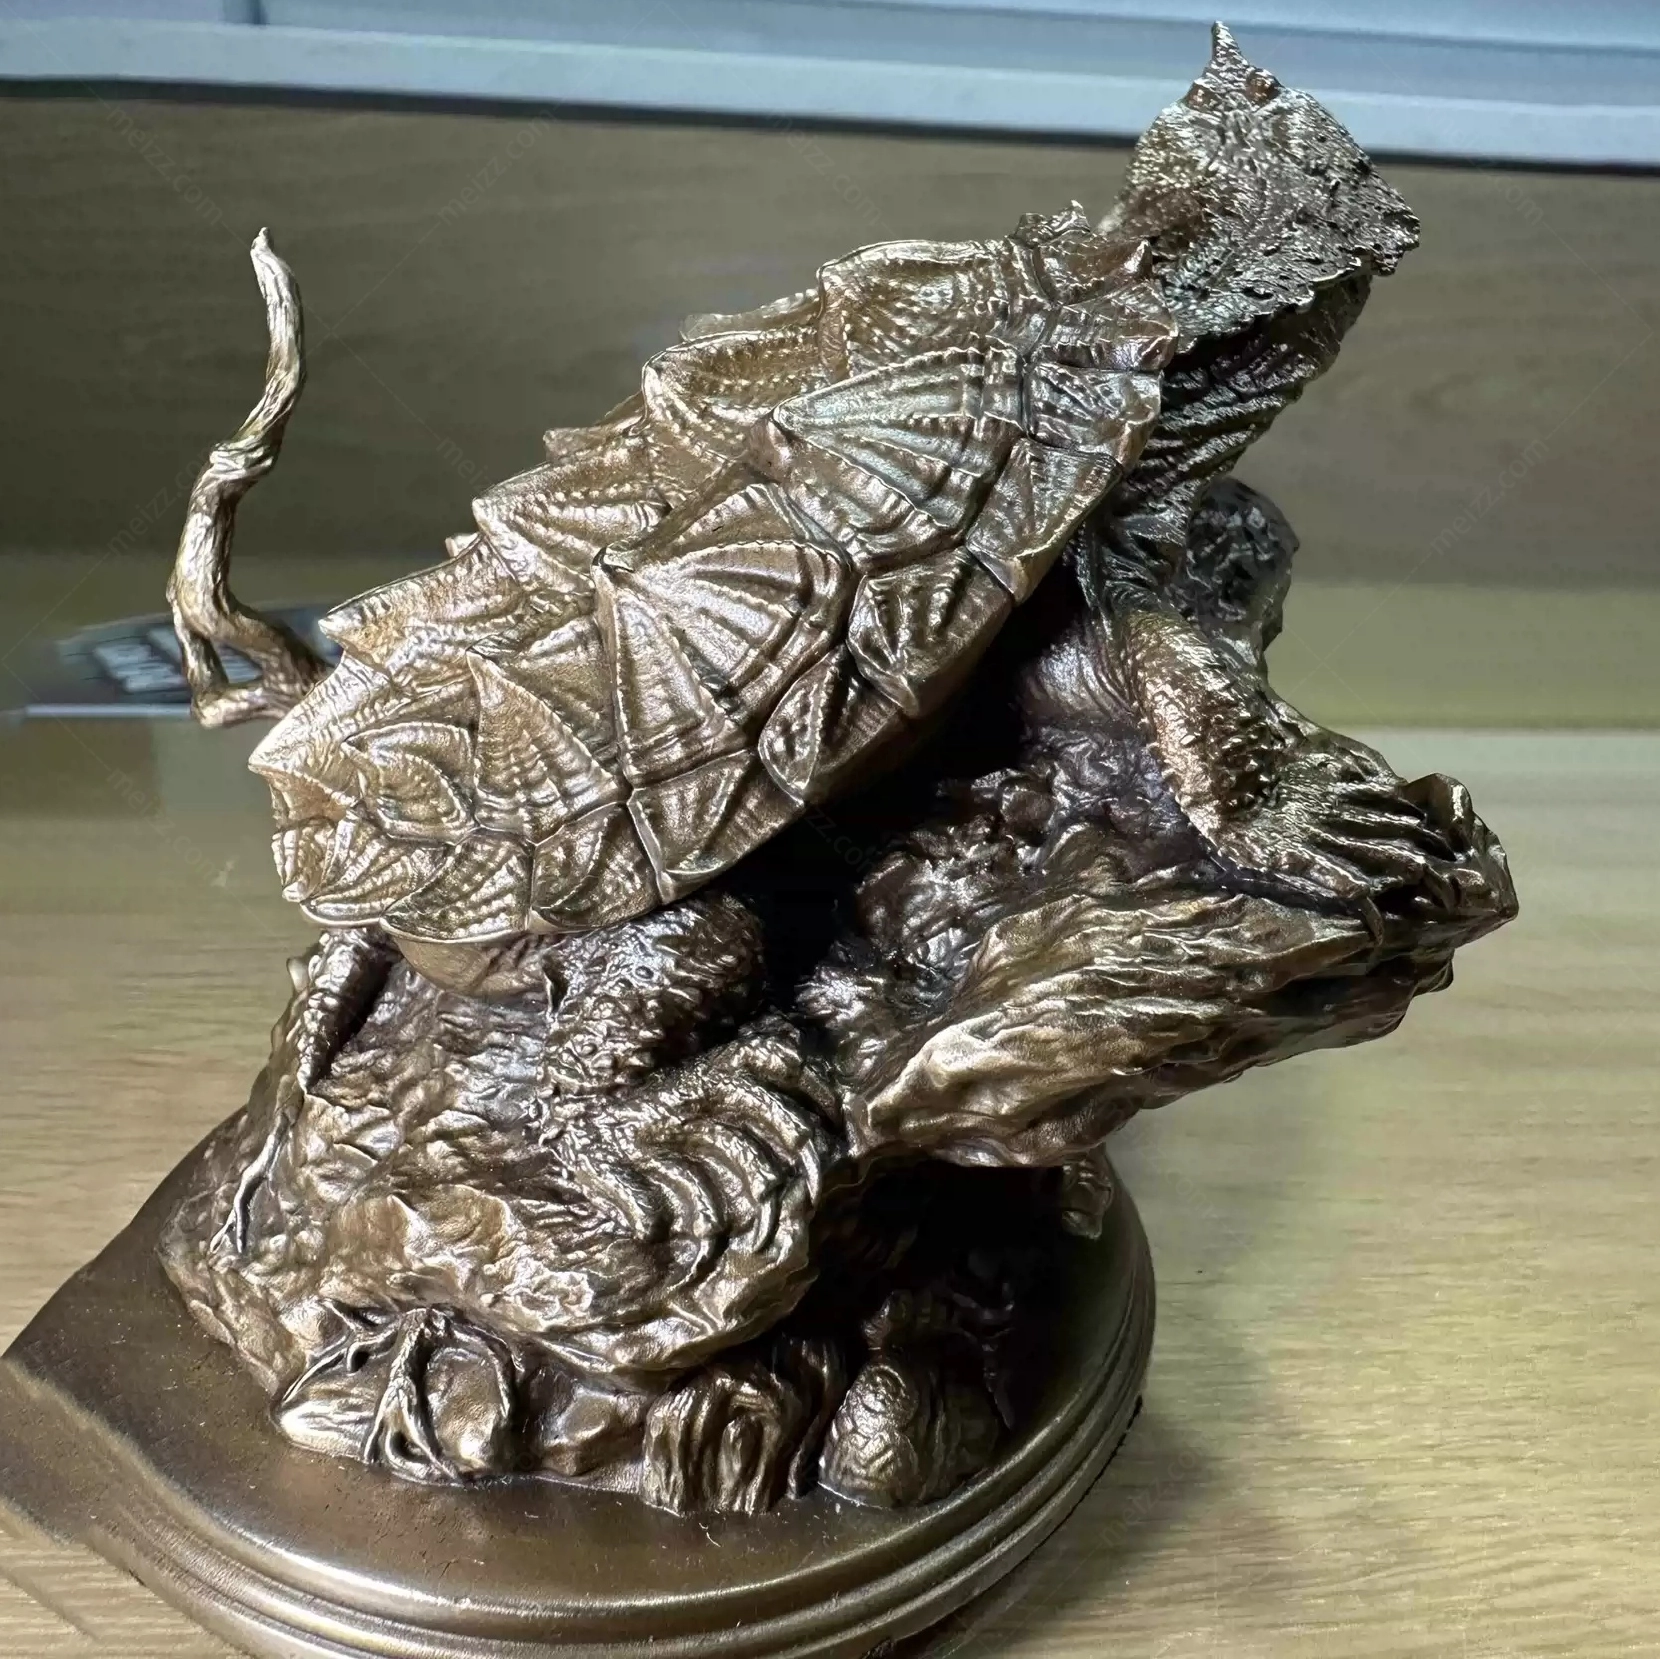 Turtle Sculptures For Sale